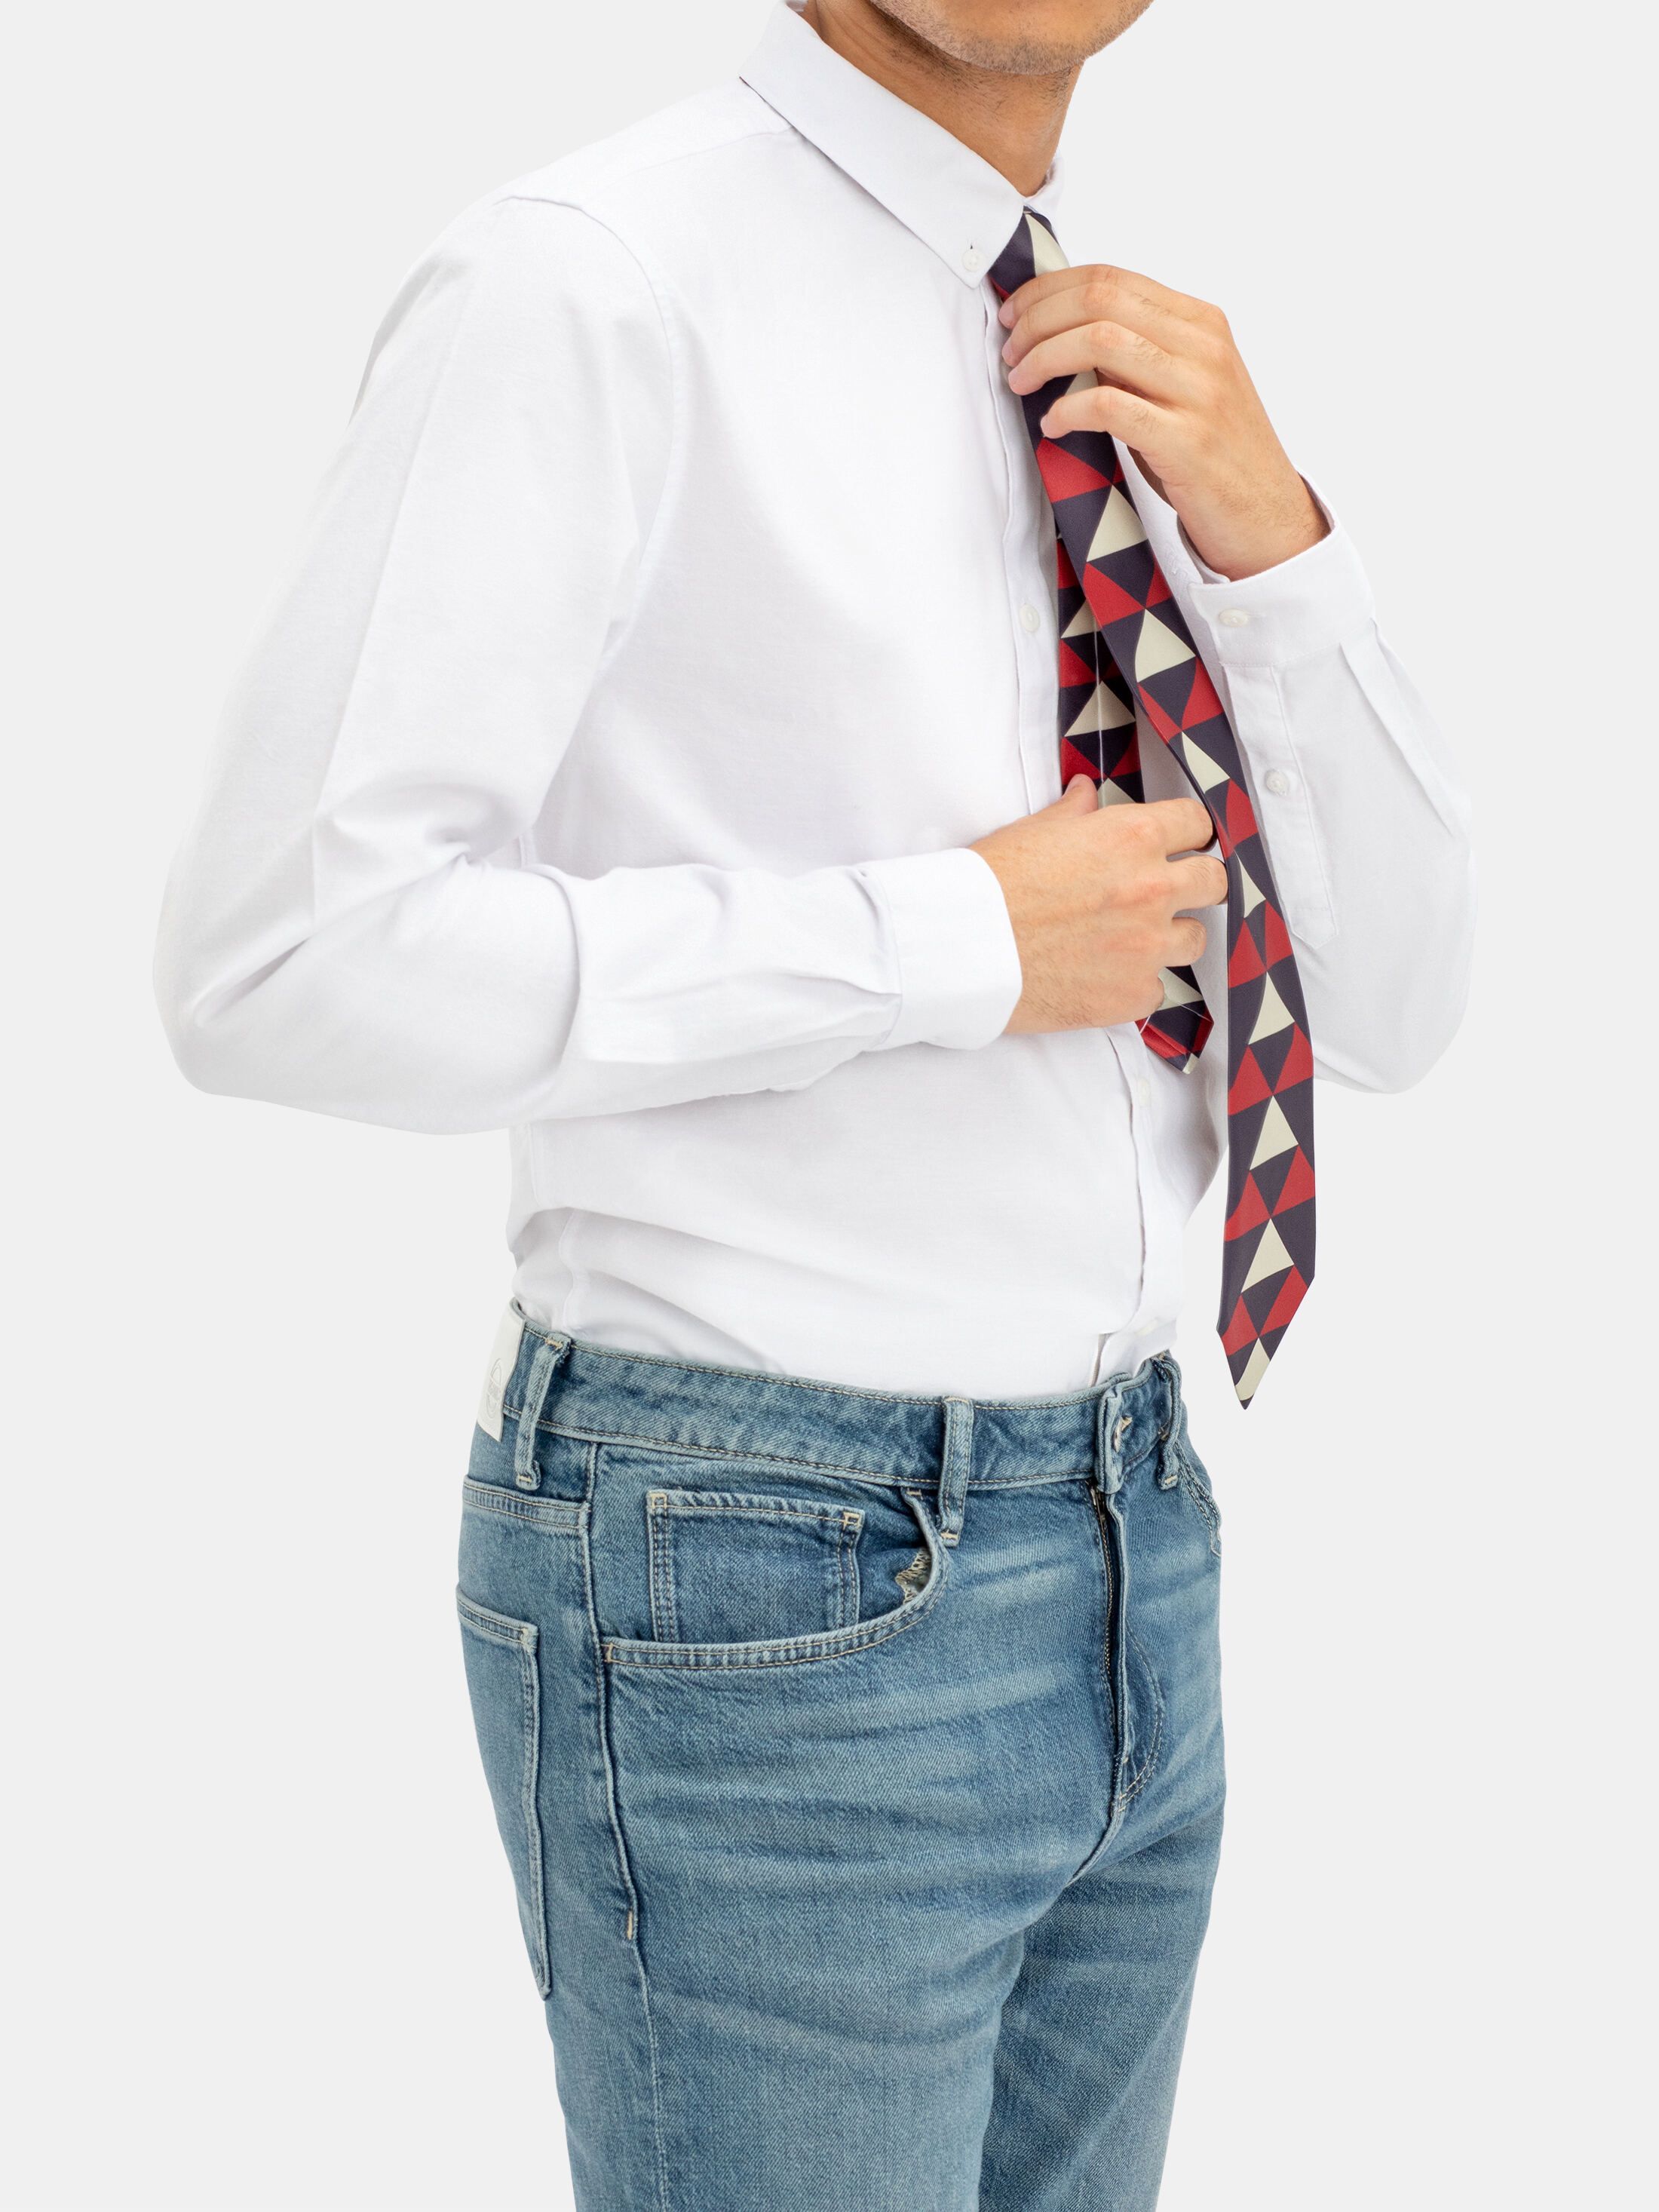 stampa la tua cravatta online